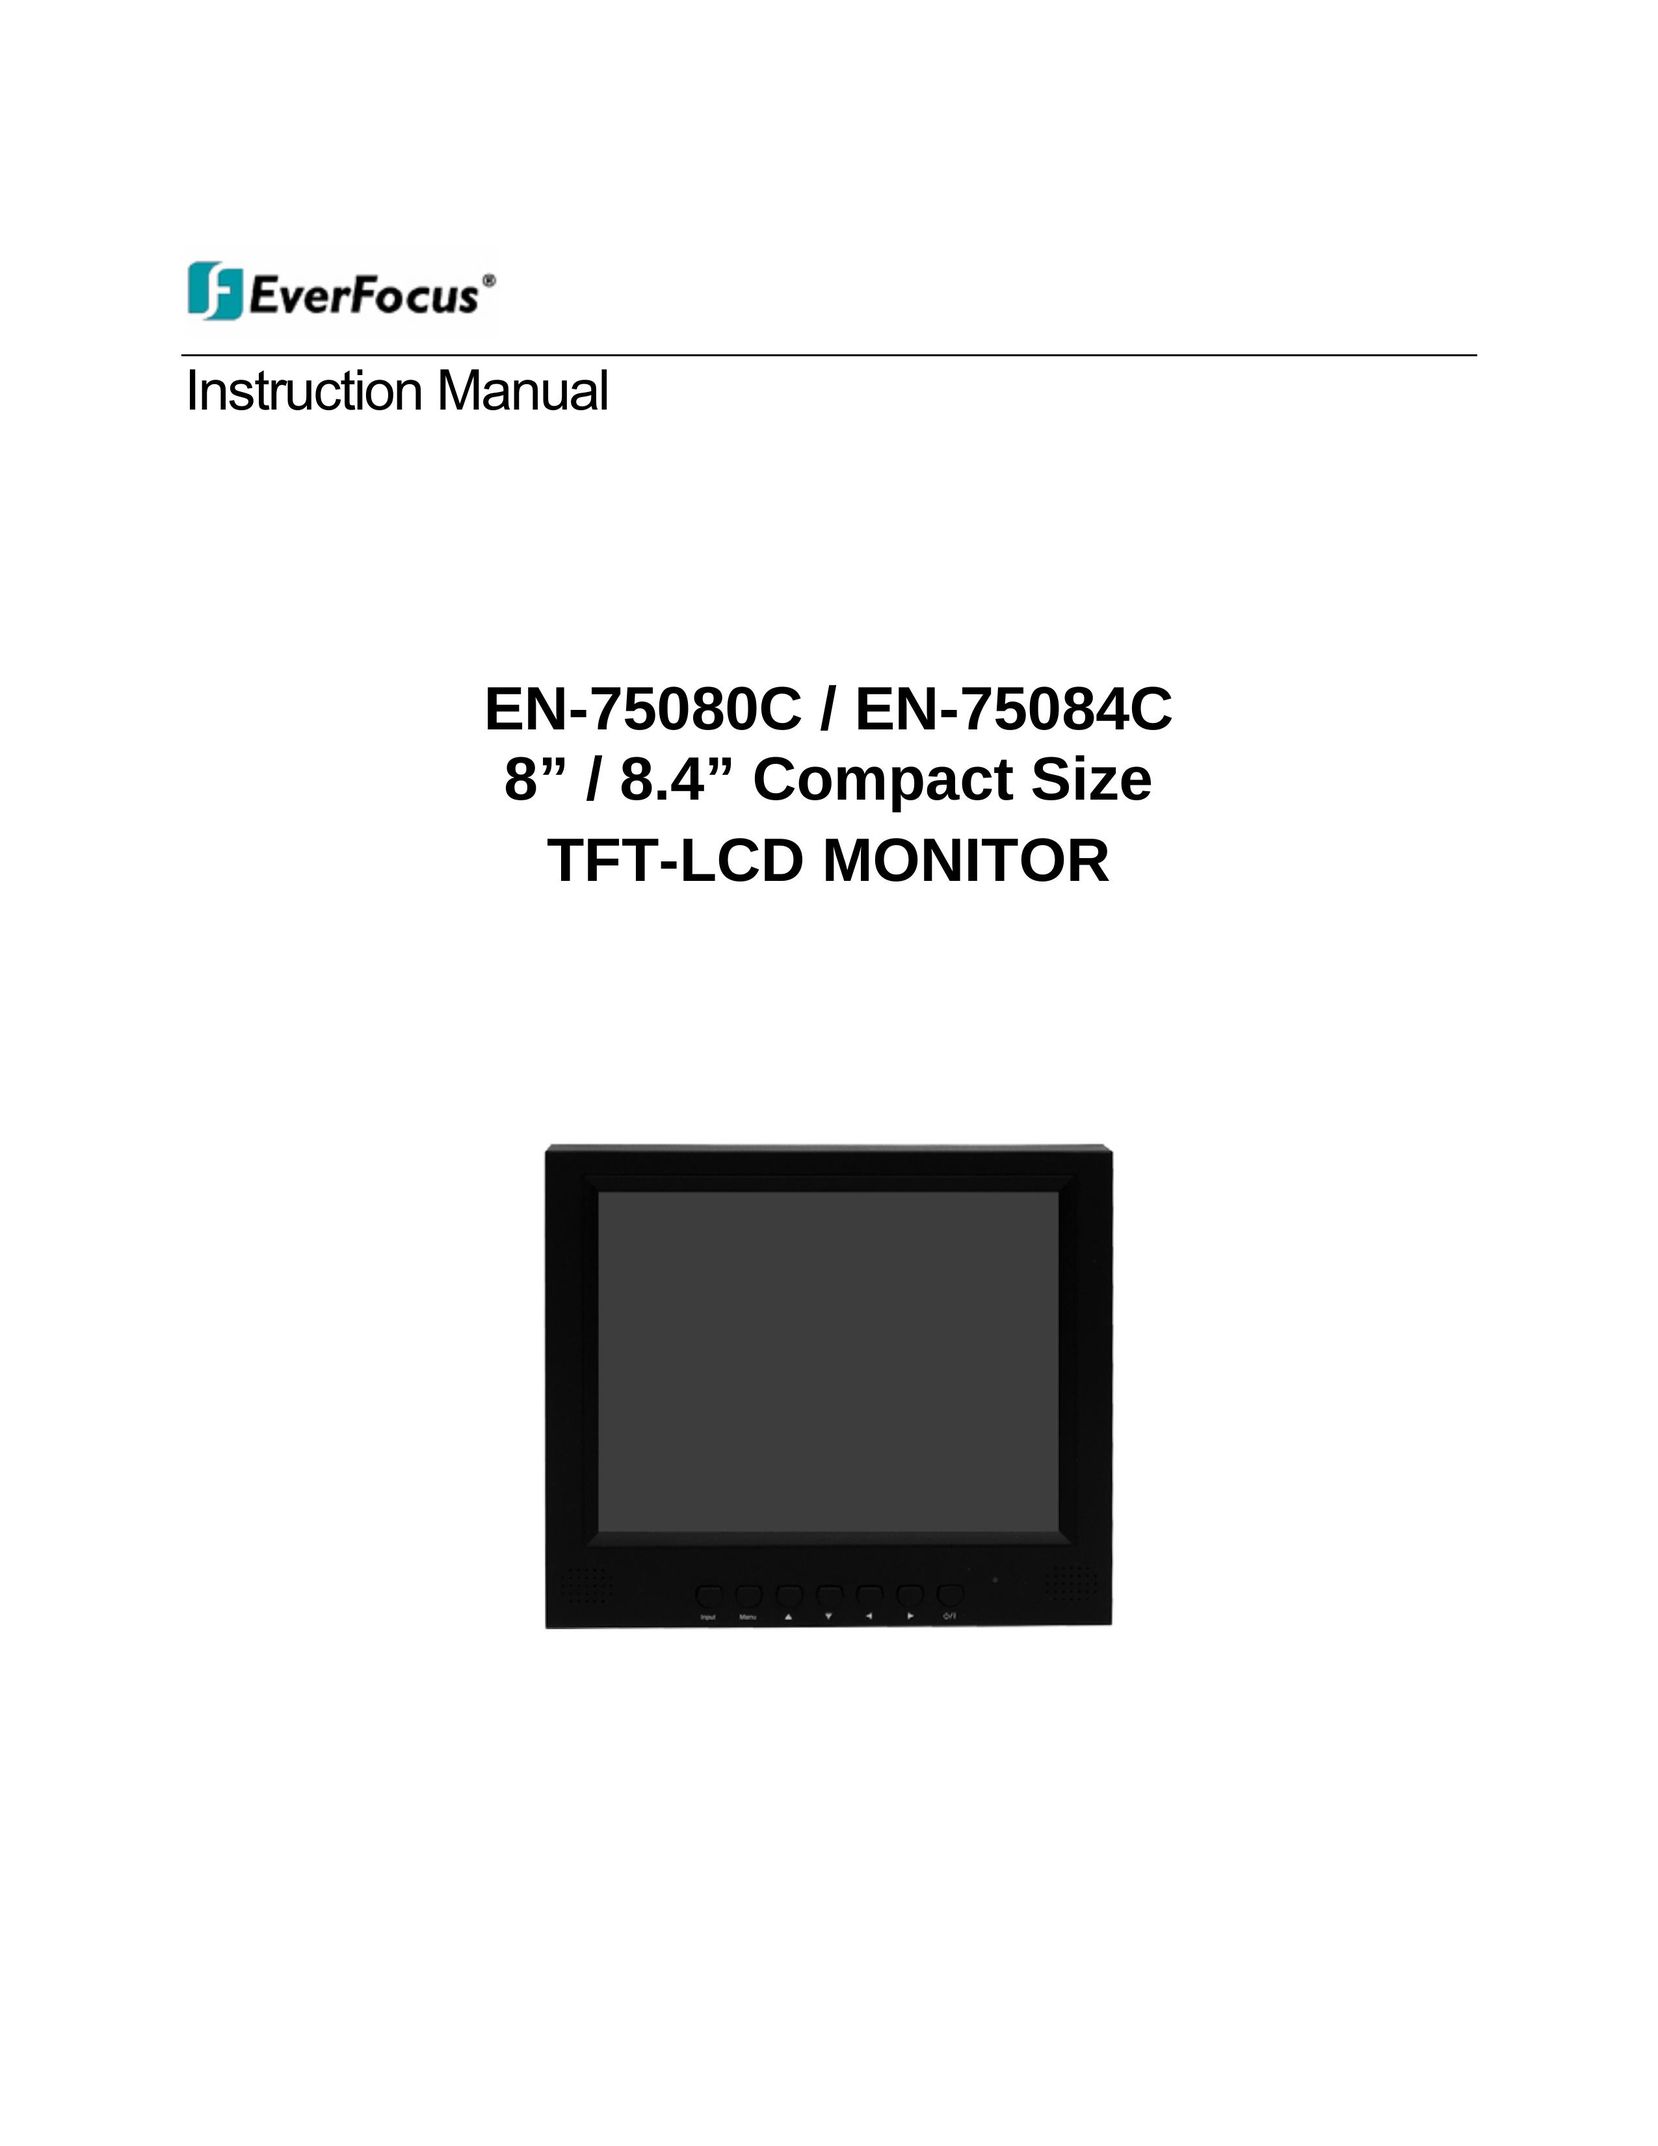 EverFocus EN-75084C Computer Monitor User Manual